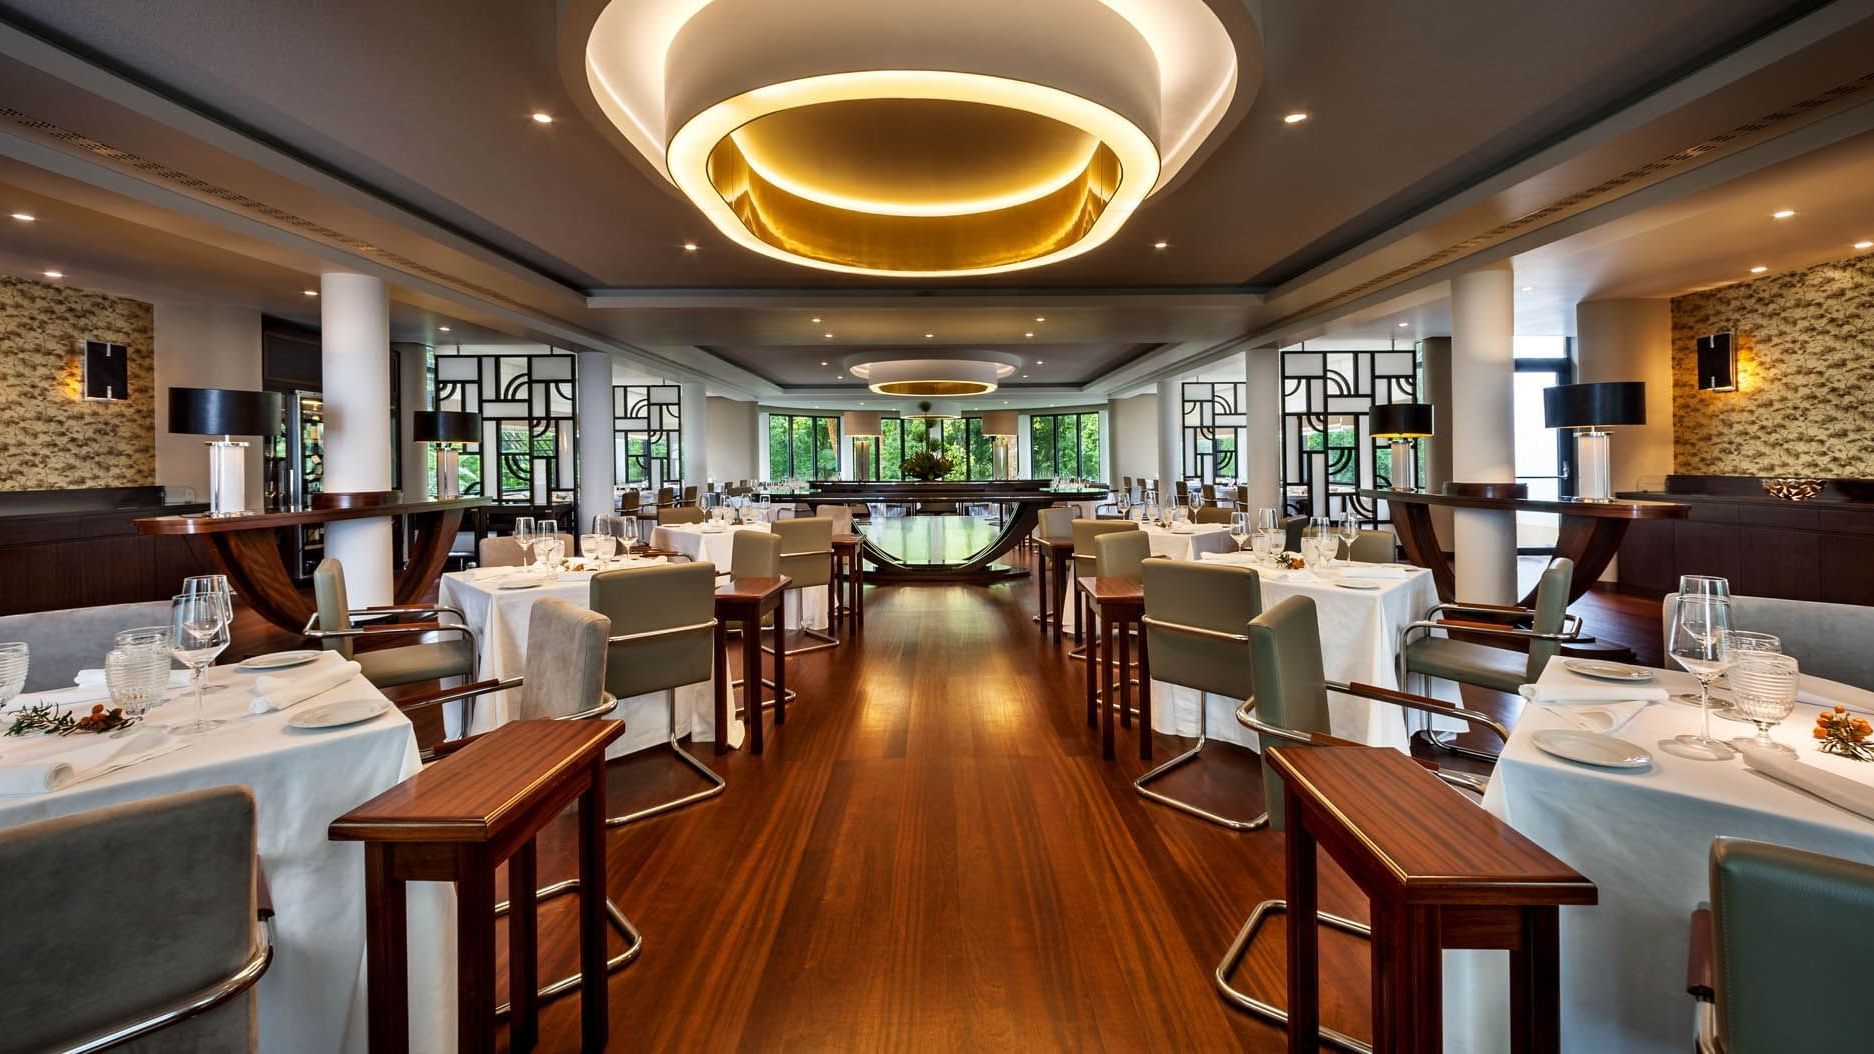 TN Restaurant with elegant ceiling lights at Bensaude Hotels